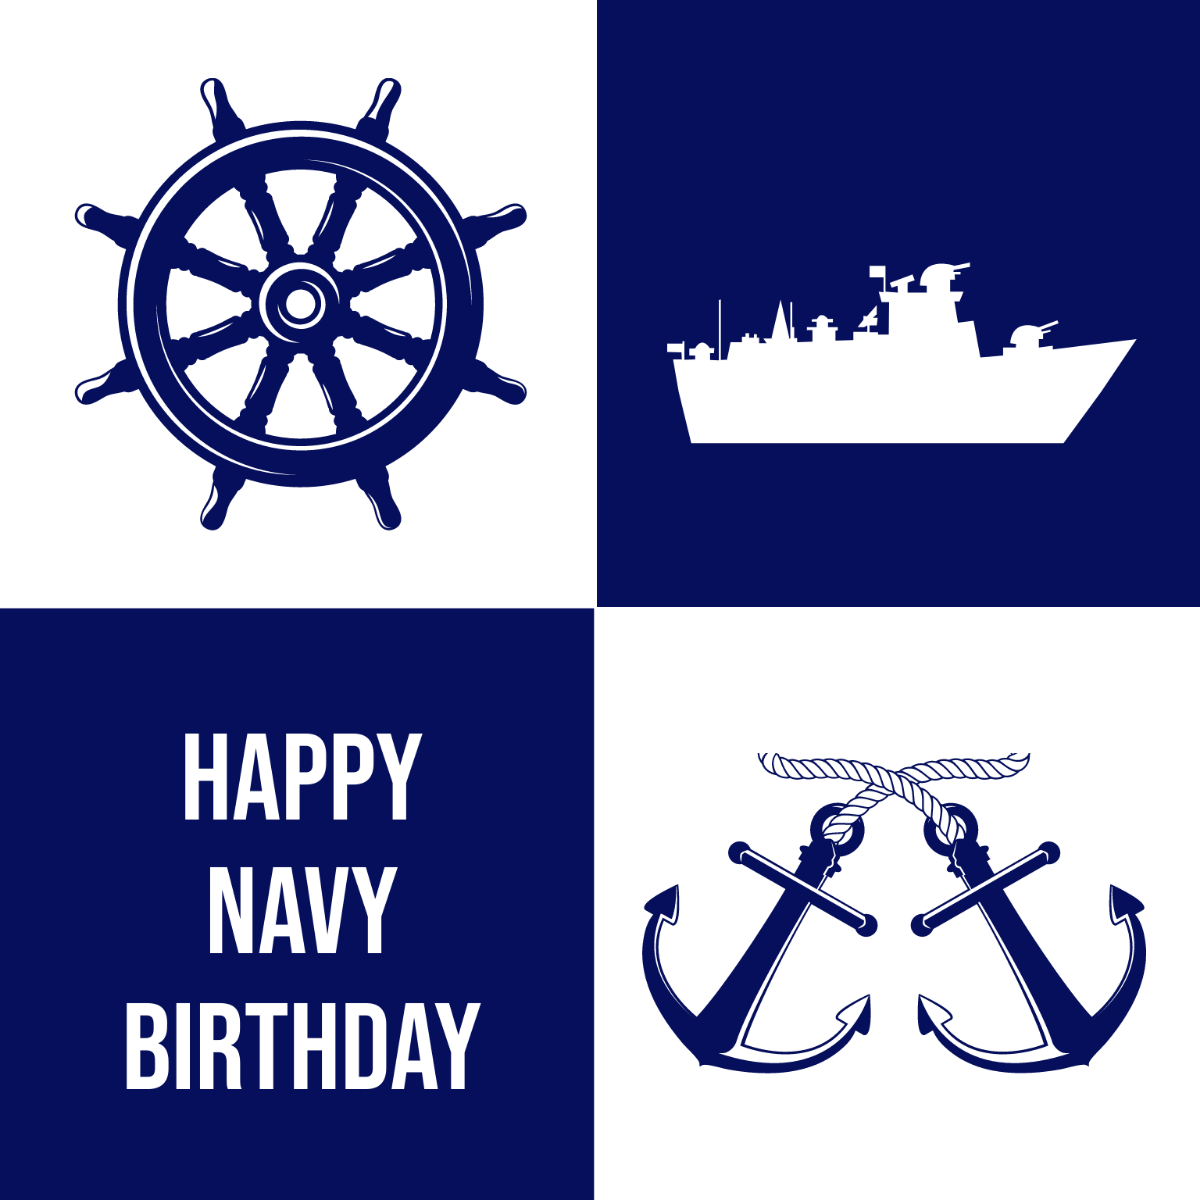 Navy Birthday Illustration Template